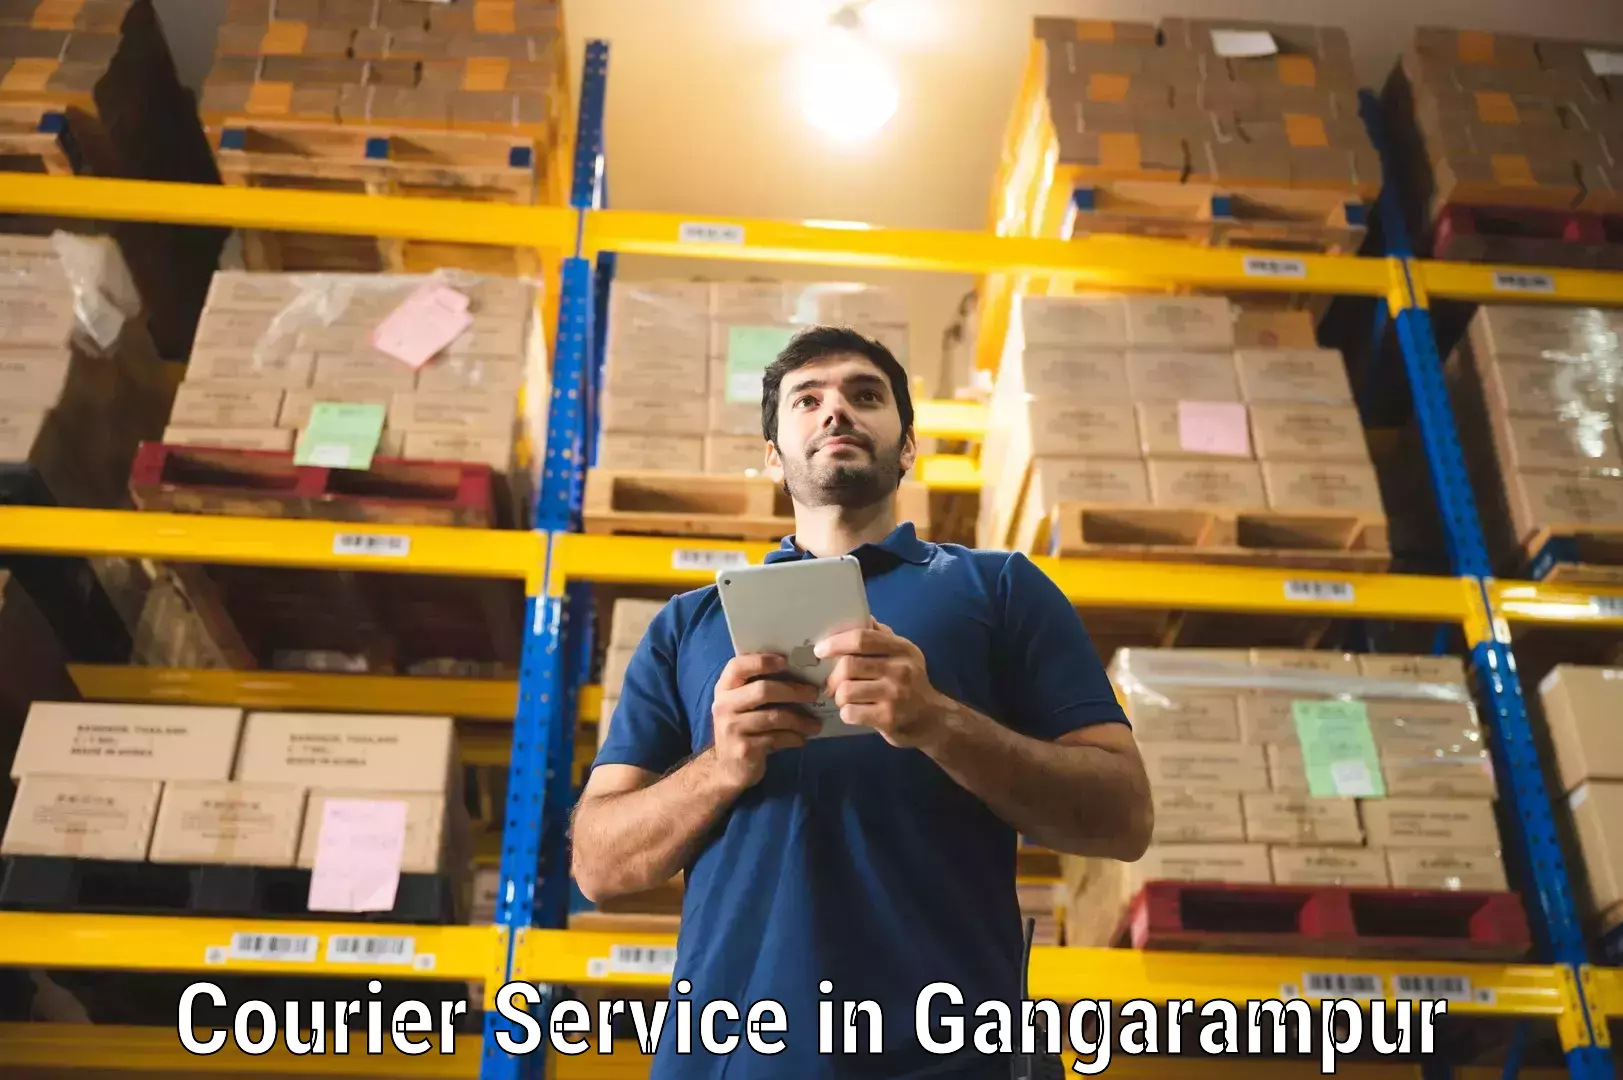 Express mail service in Gangarampur